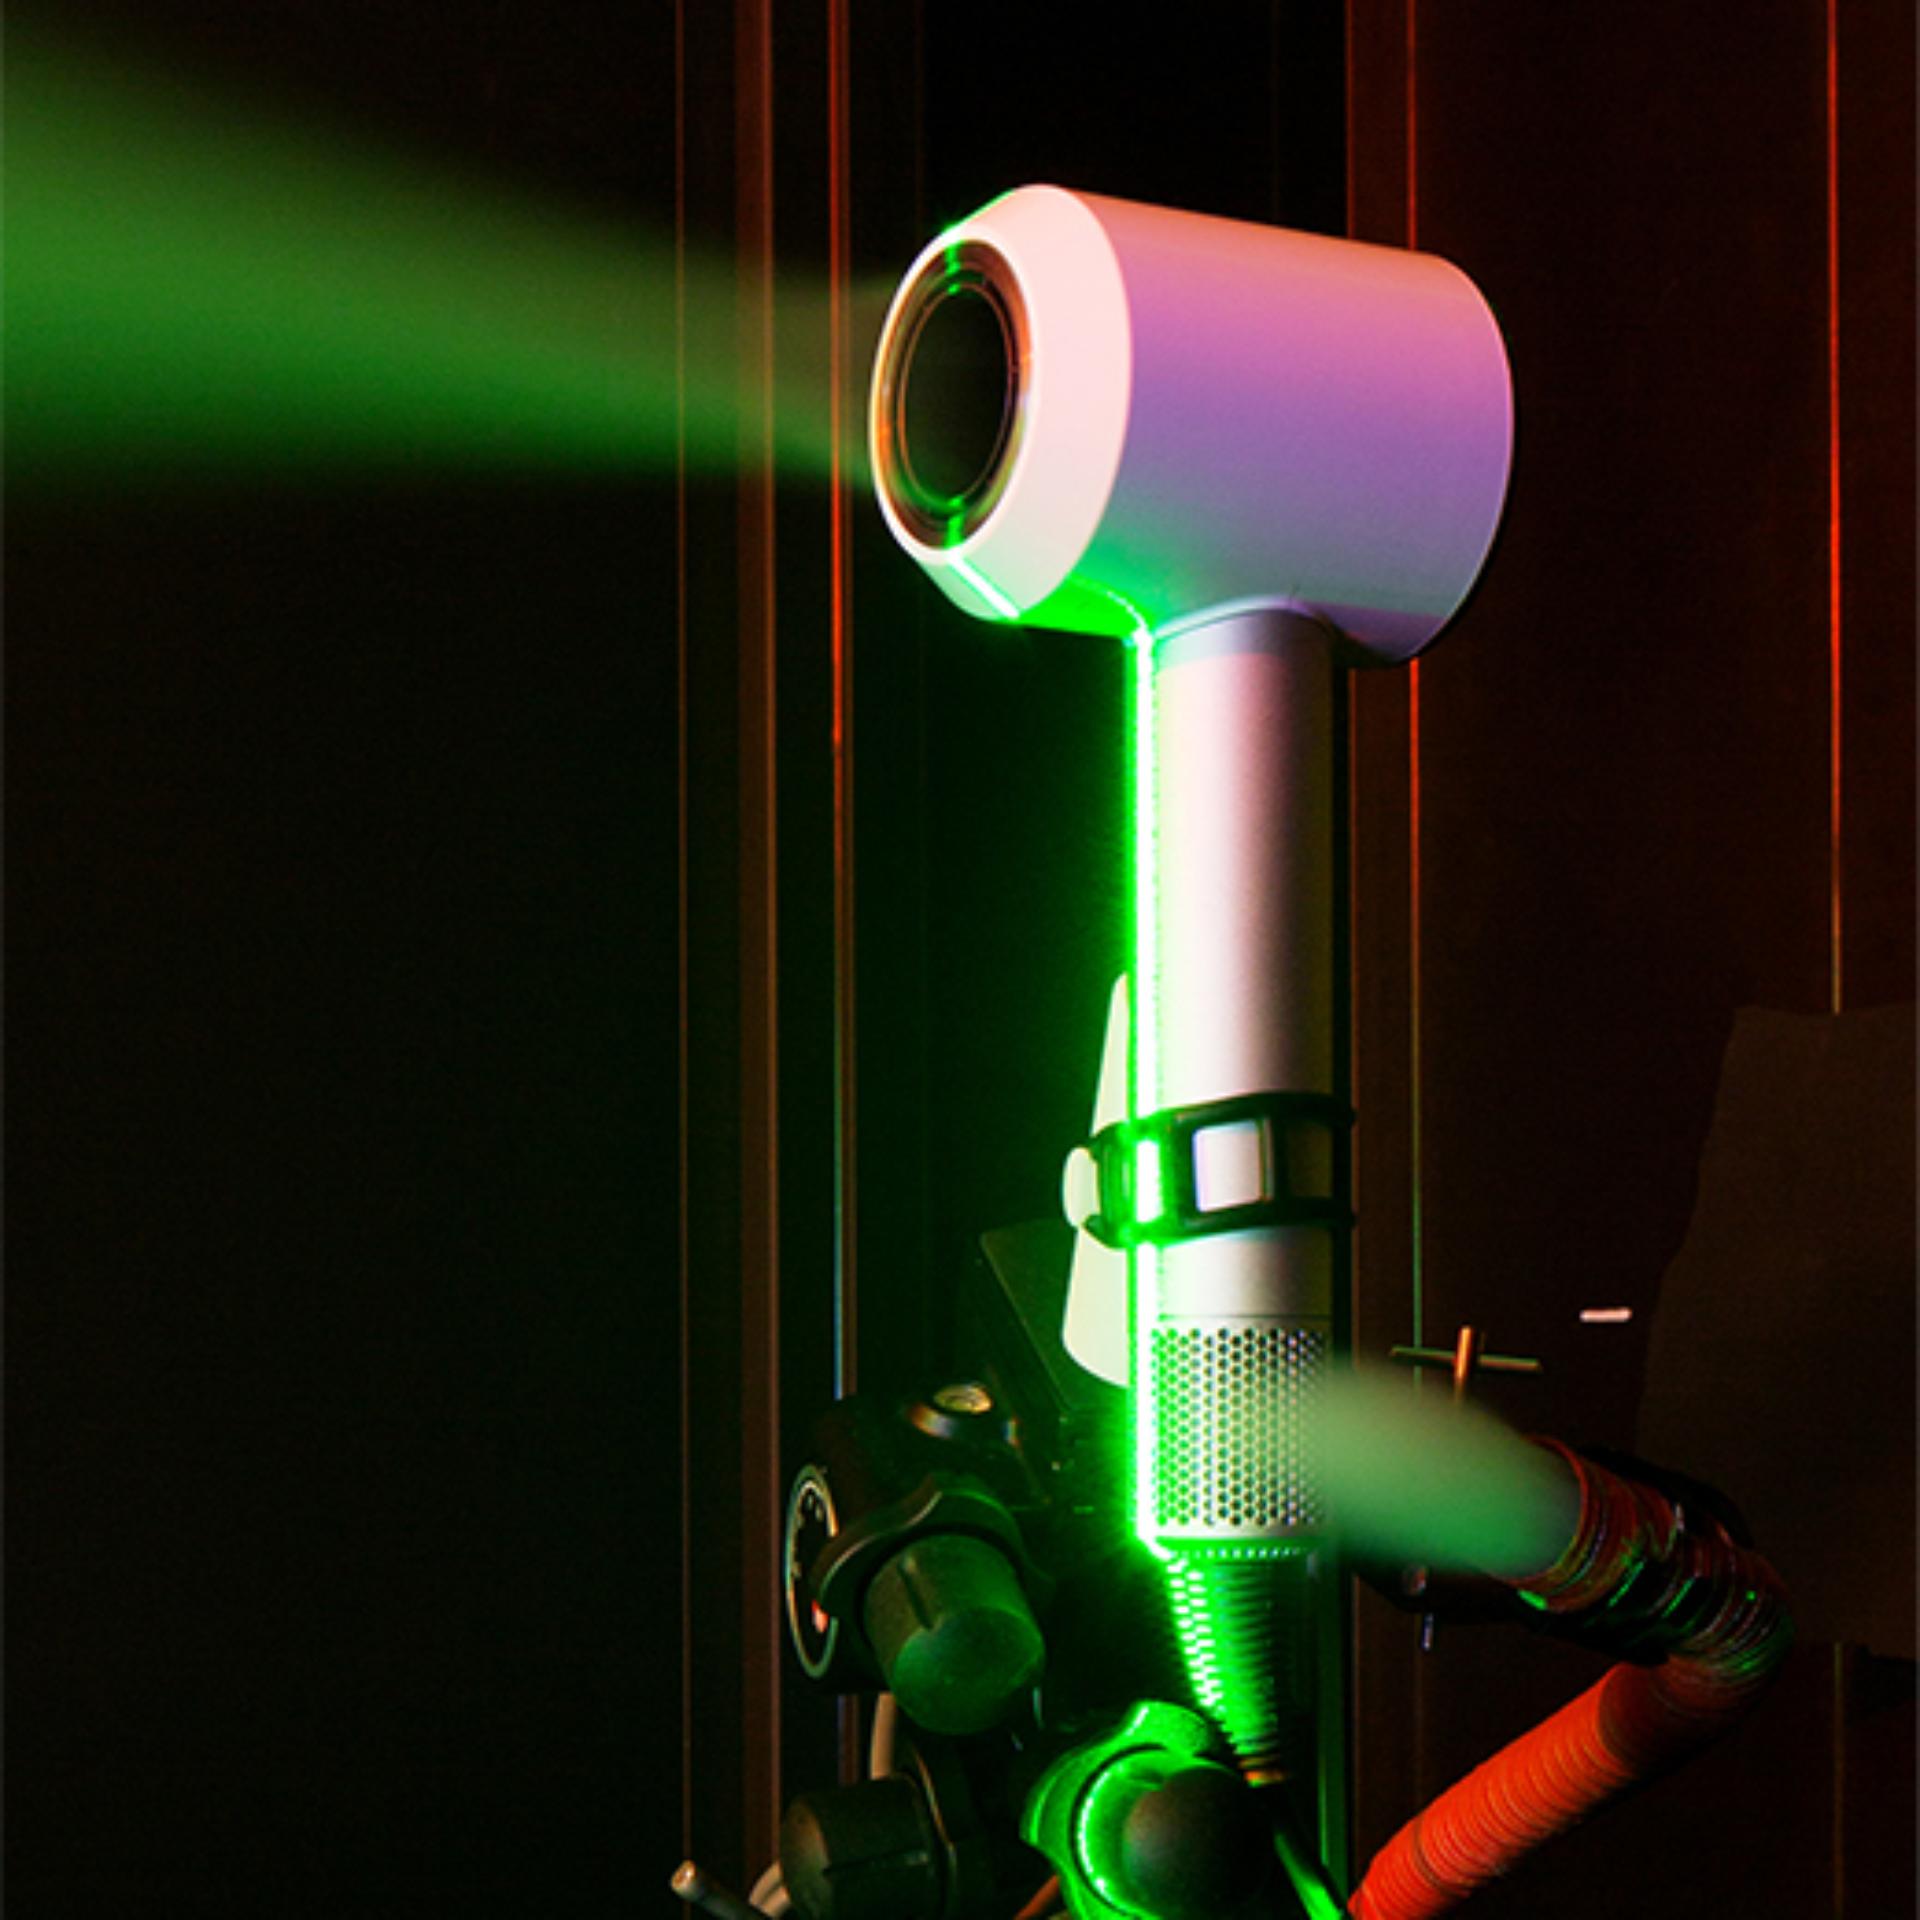 Dyson Supersonic風筒於紫外線燈下進行測試。